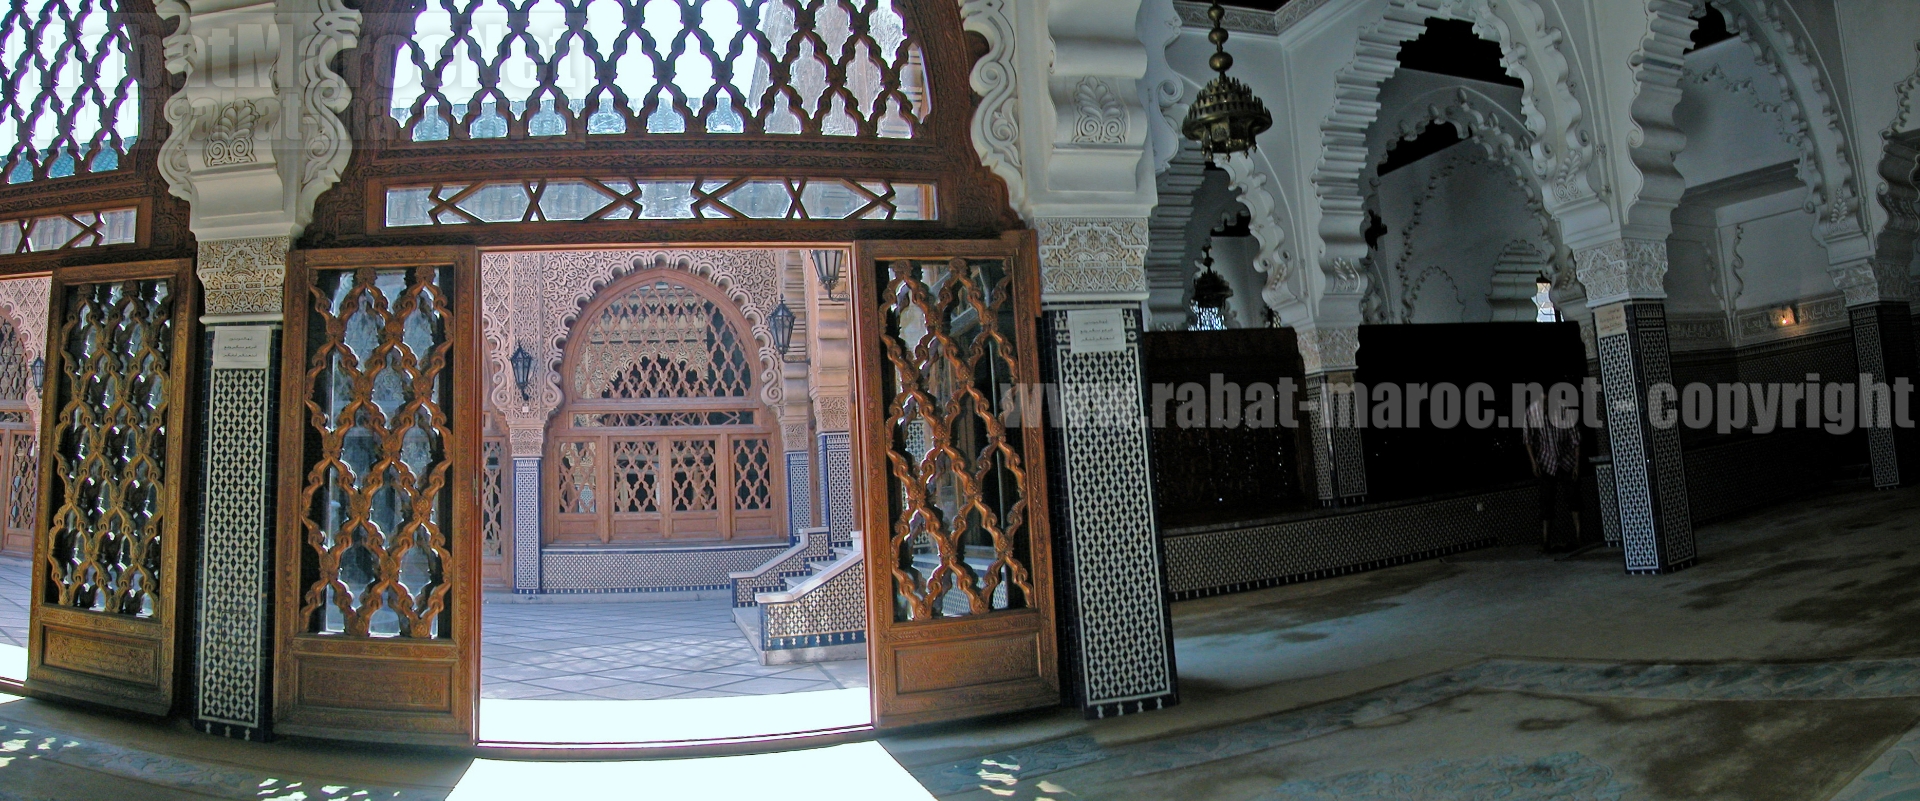 mosquee hassan interieur 2004